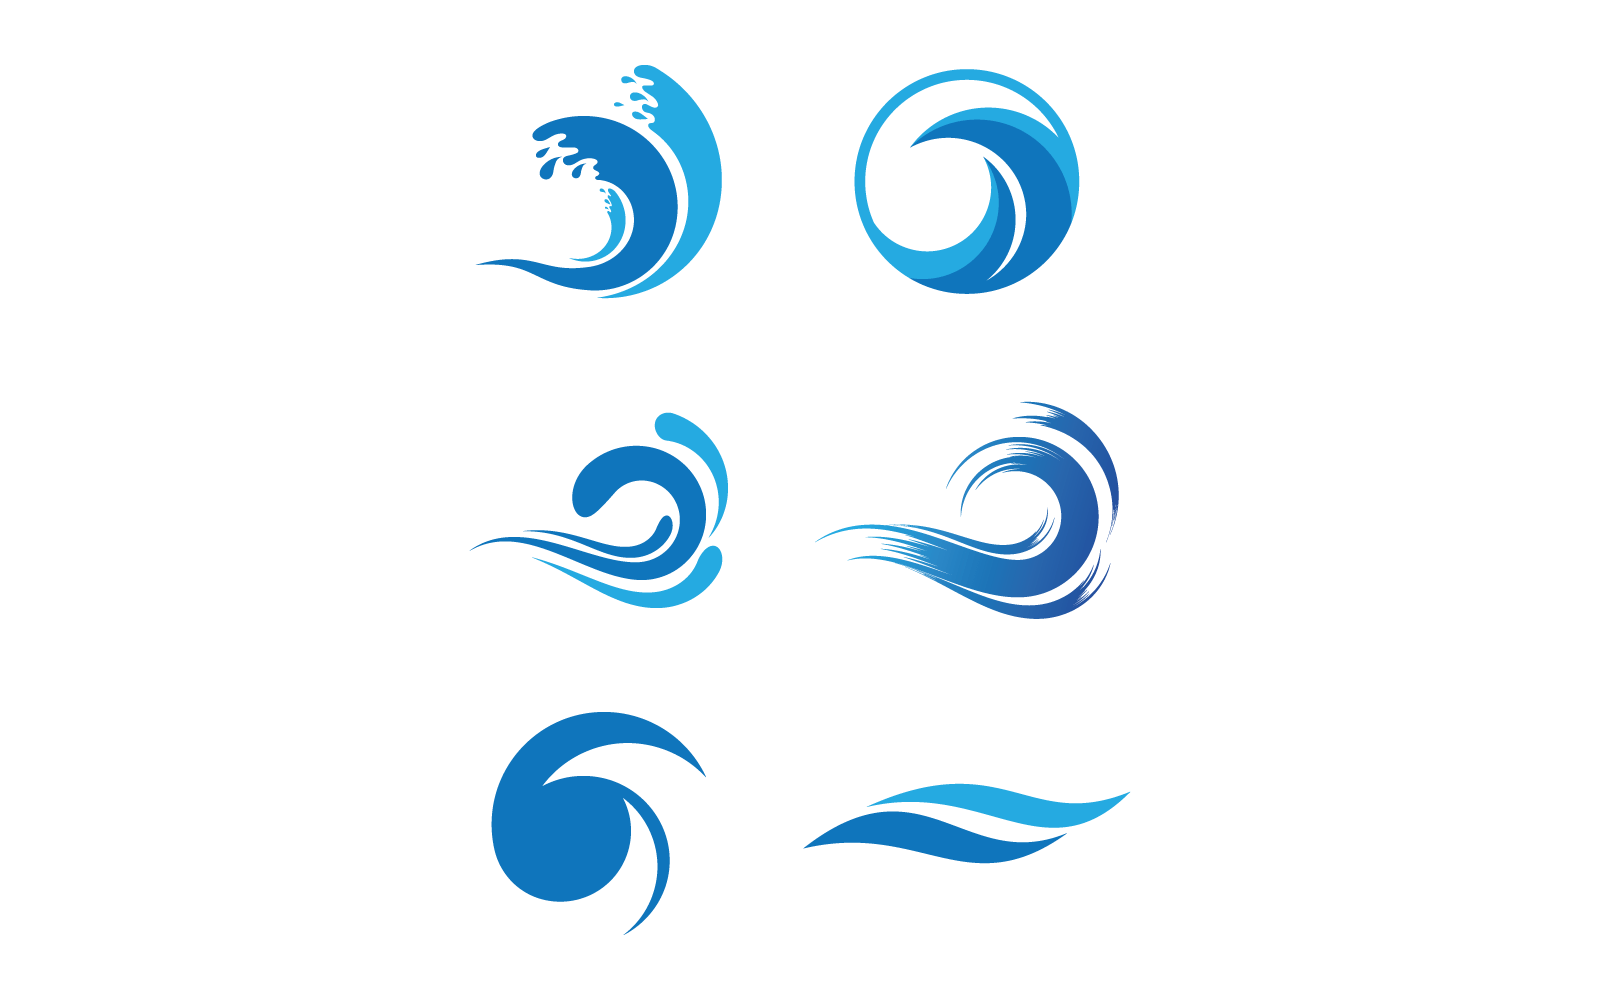 Шаблон векторной иллюстрации логотипа Water Wave